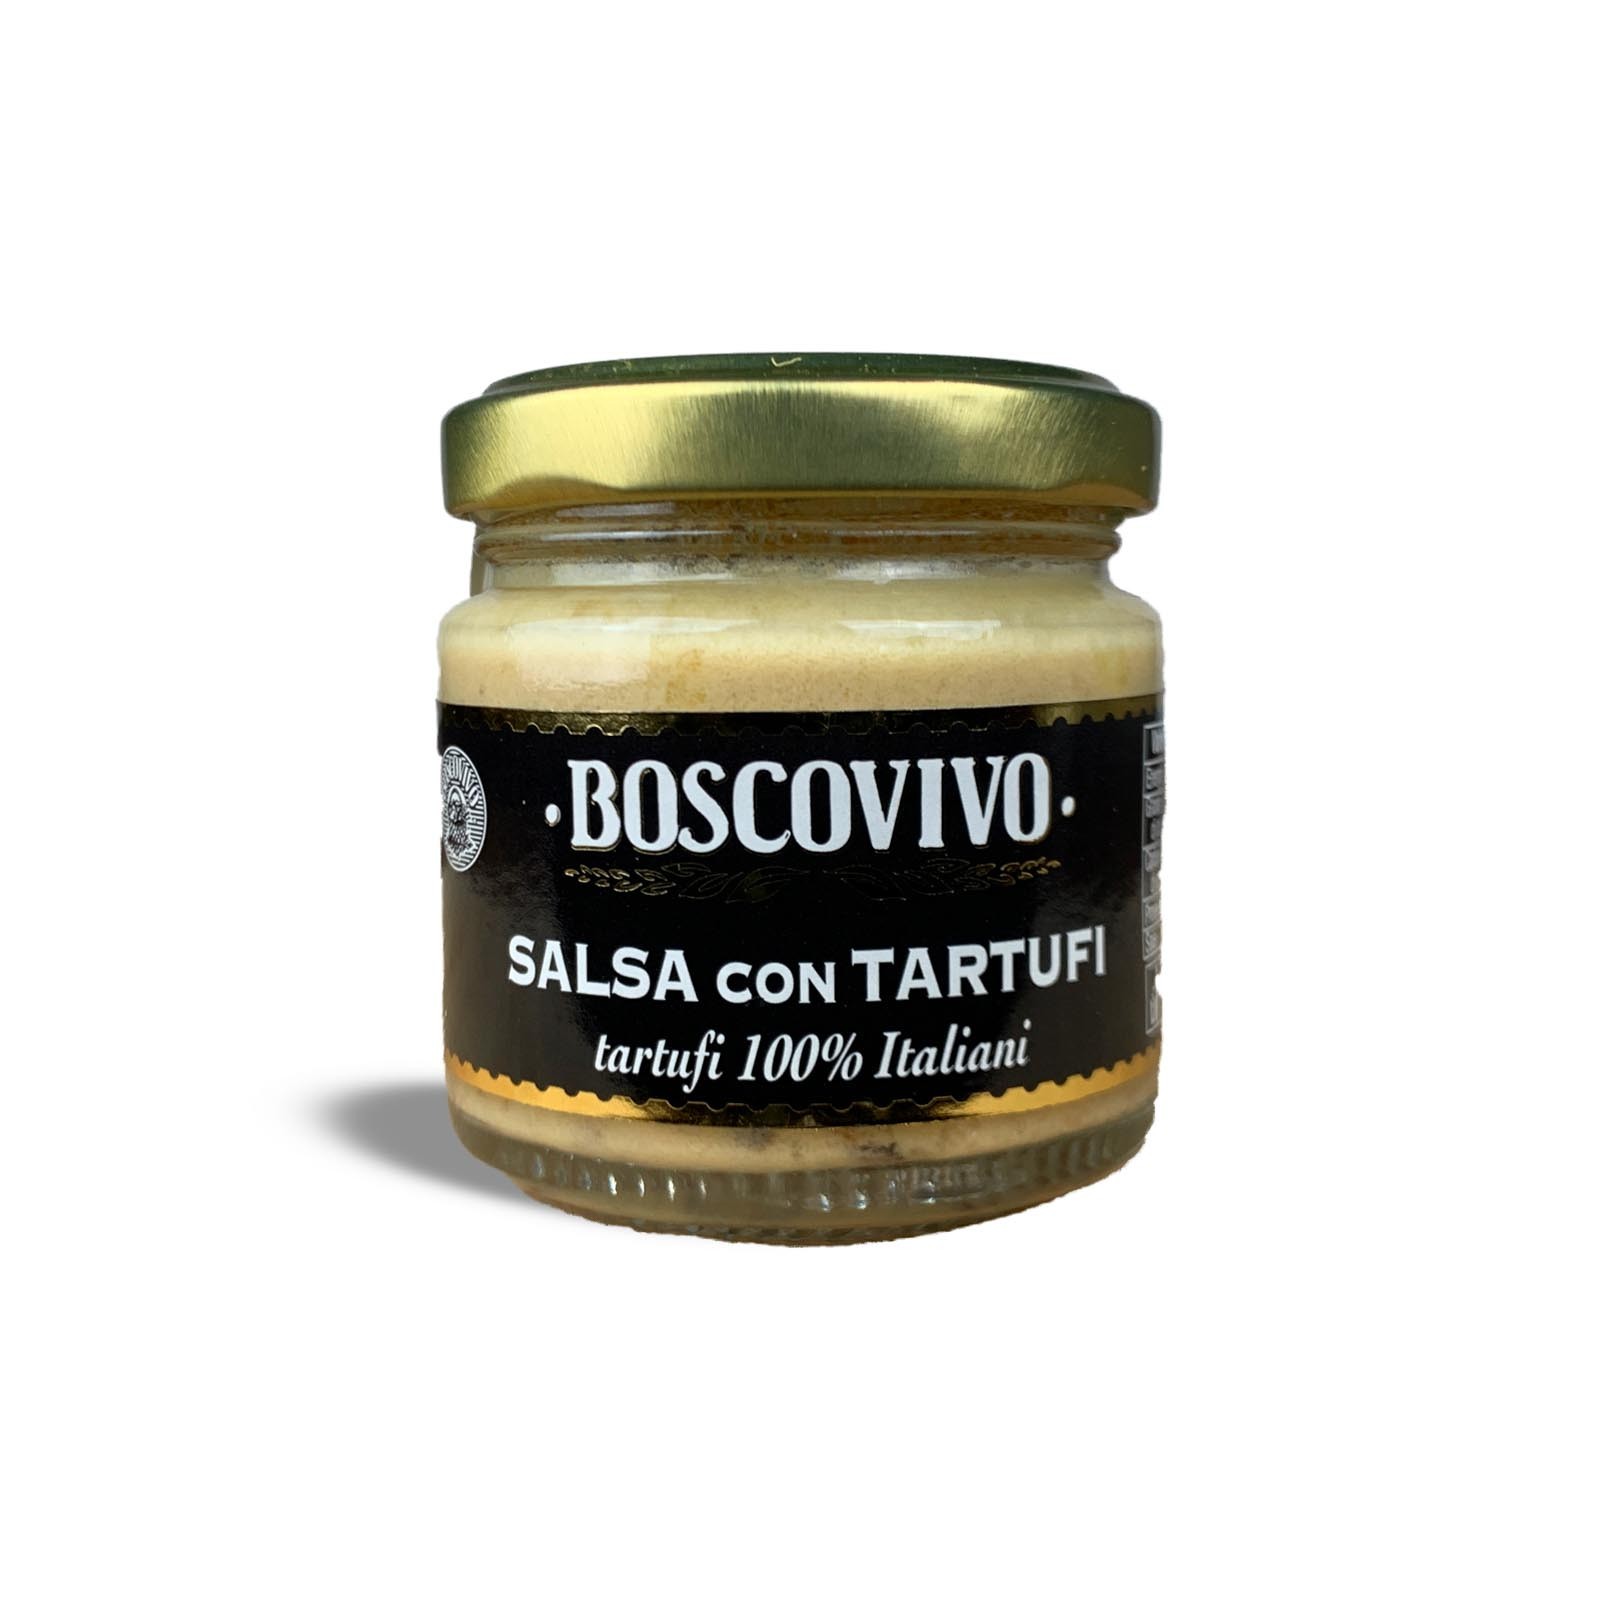 White Truffle Sauce - Tuber Albidium Pico - 100% Italian.